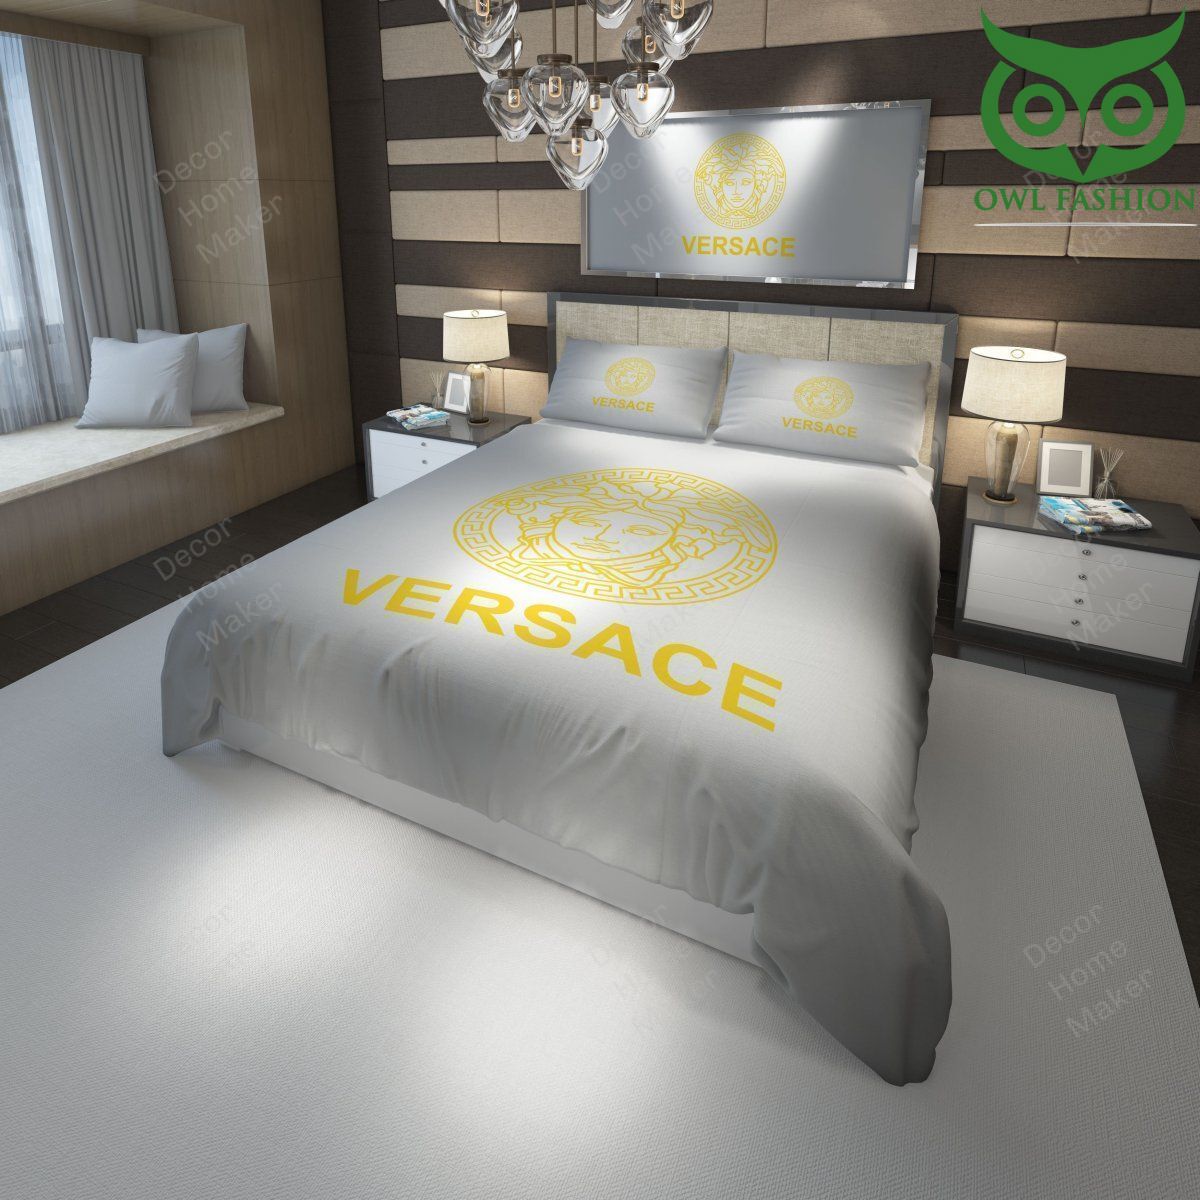 155 White Versace with golden logo bedding set